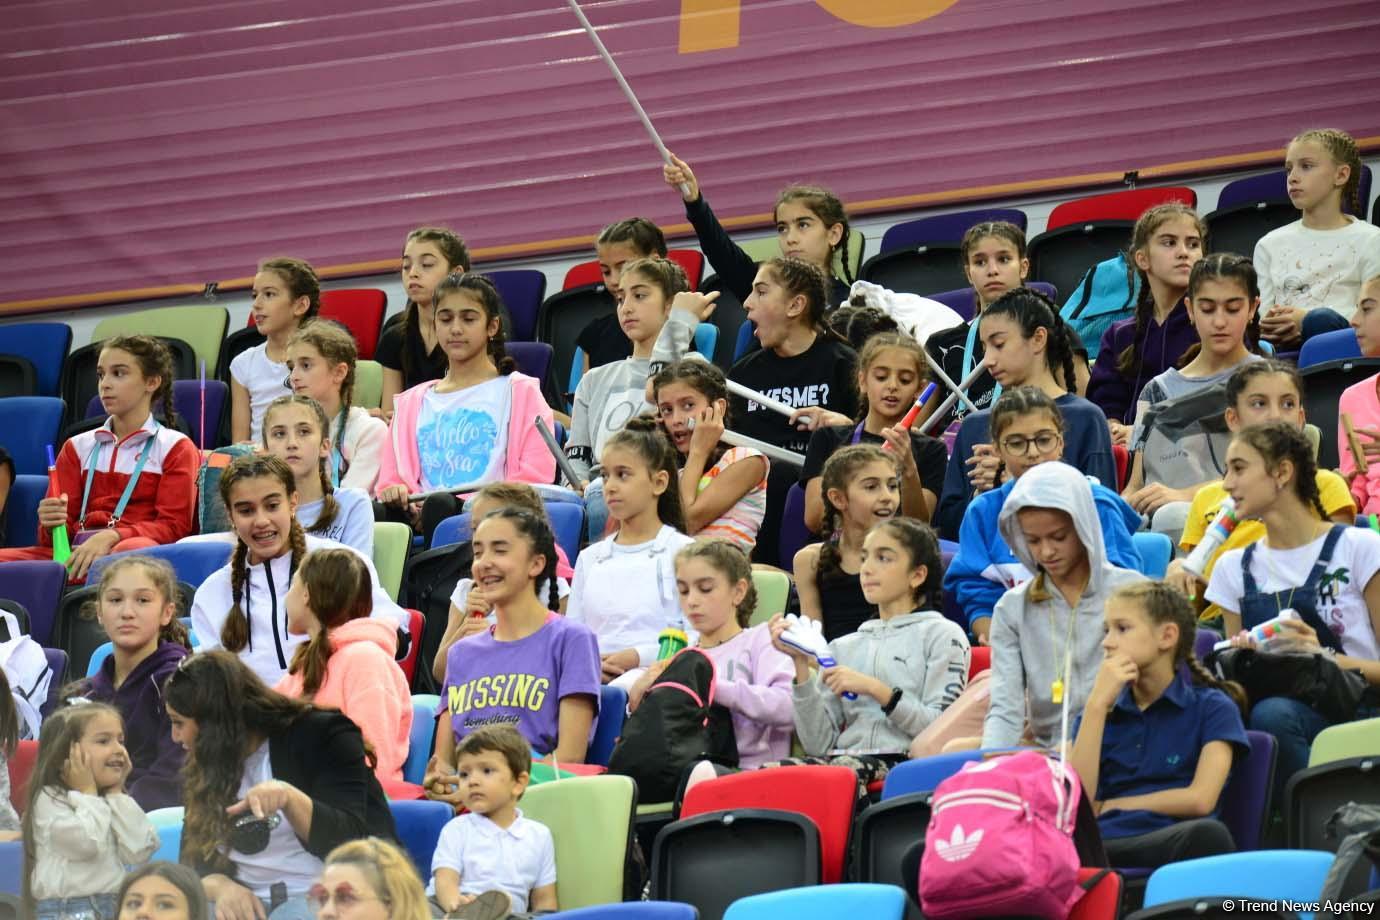 37th Rhythmic Gymnastics World Championships kick off in Baku (PHOTO)